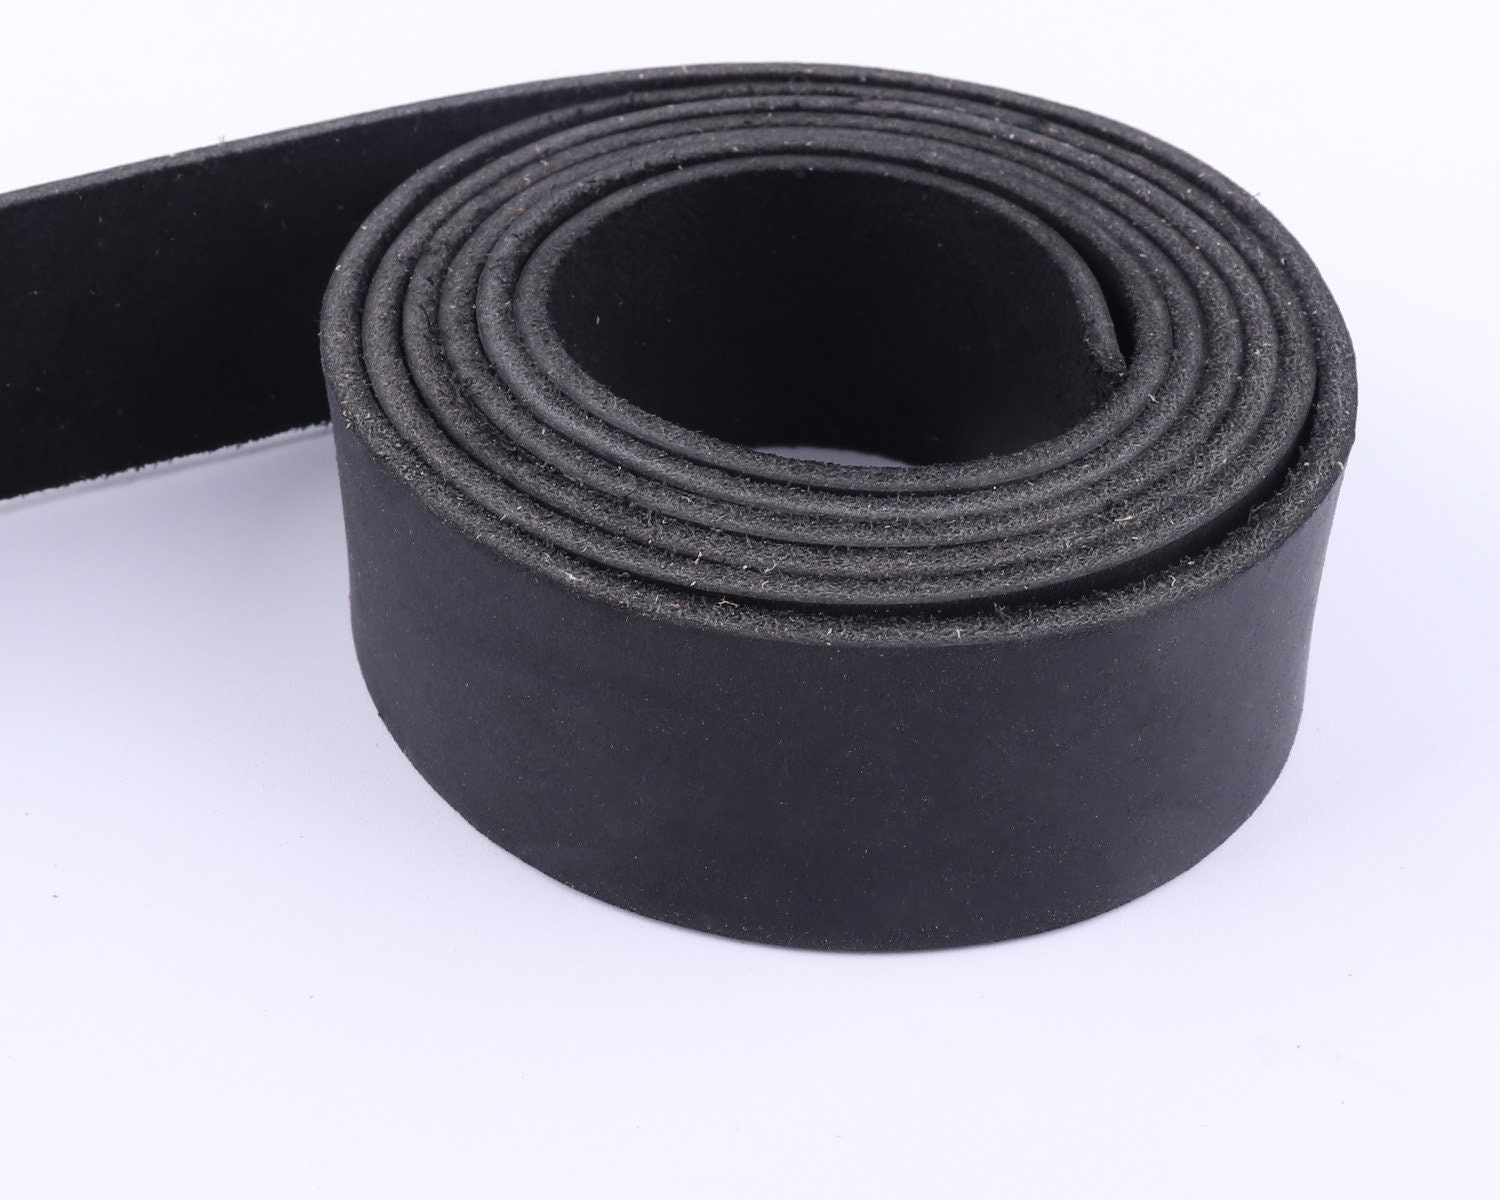 Realeather Leather Strip, 1.5 inch x 42 inch, Black